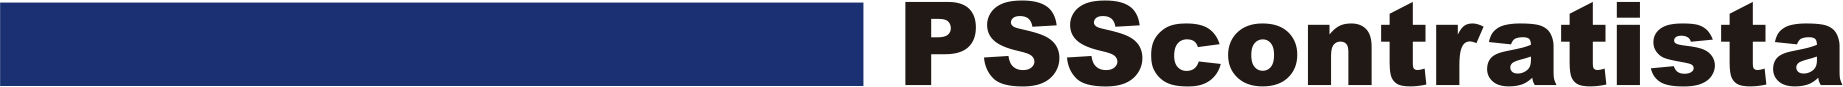 logo PSS Contratista